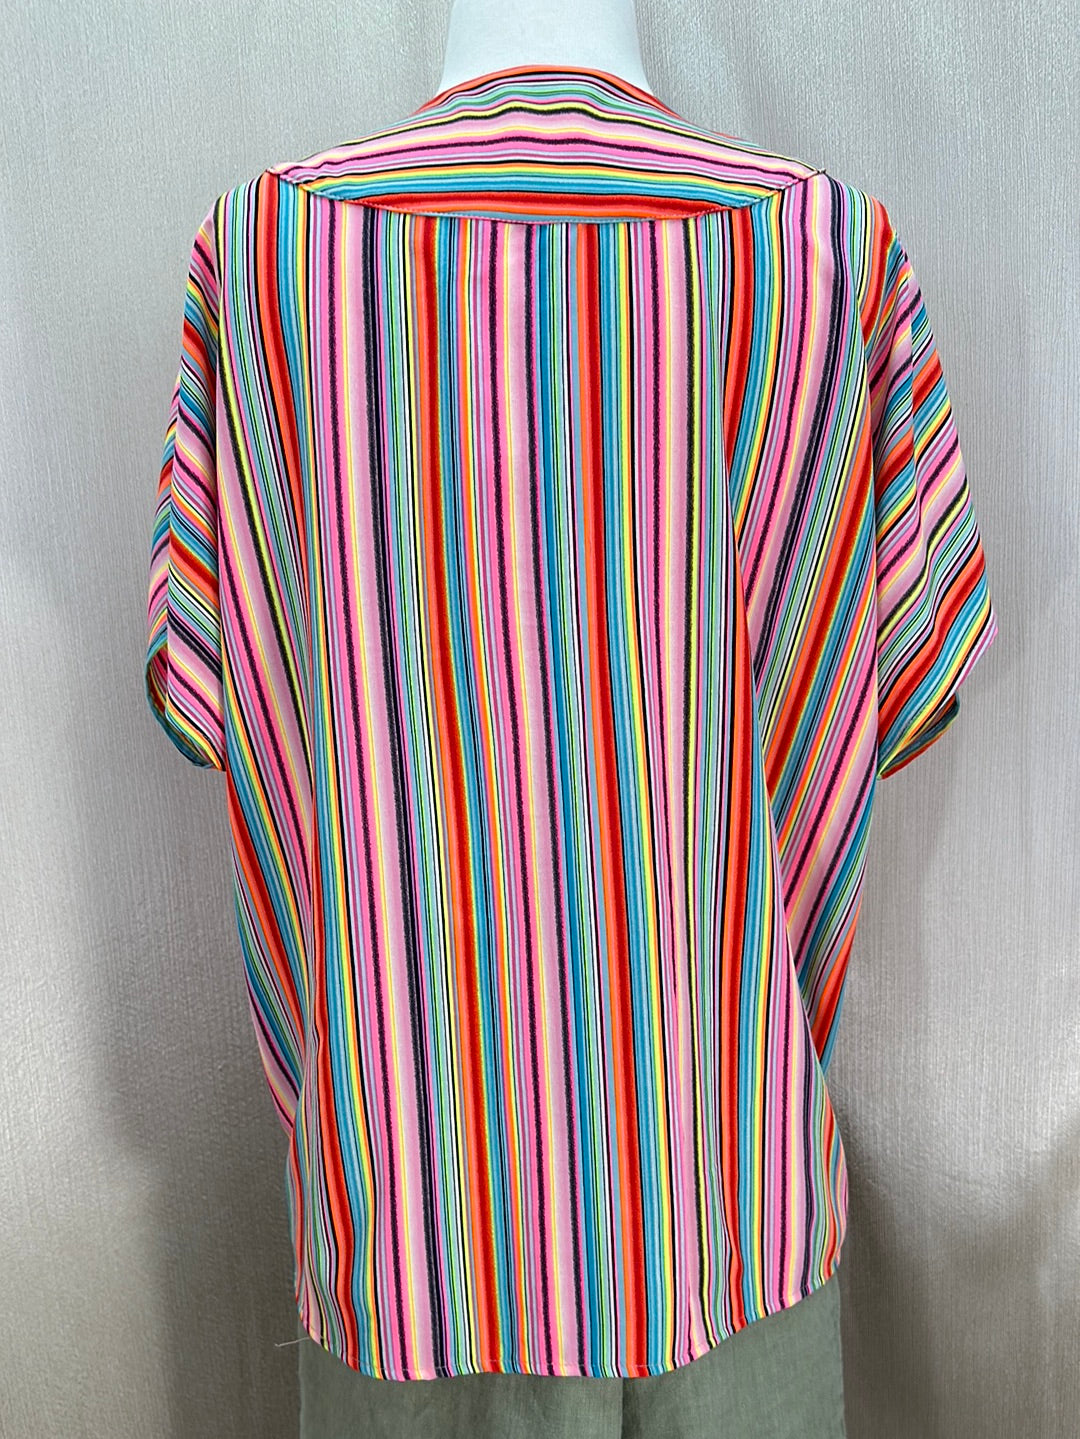 IVY JANE neon multicolor Stripe Oversized V-Neck Short Sleeve Top - S/M